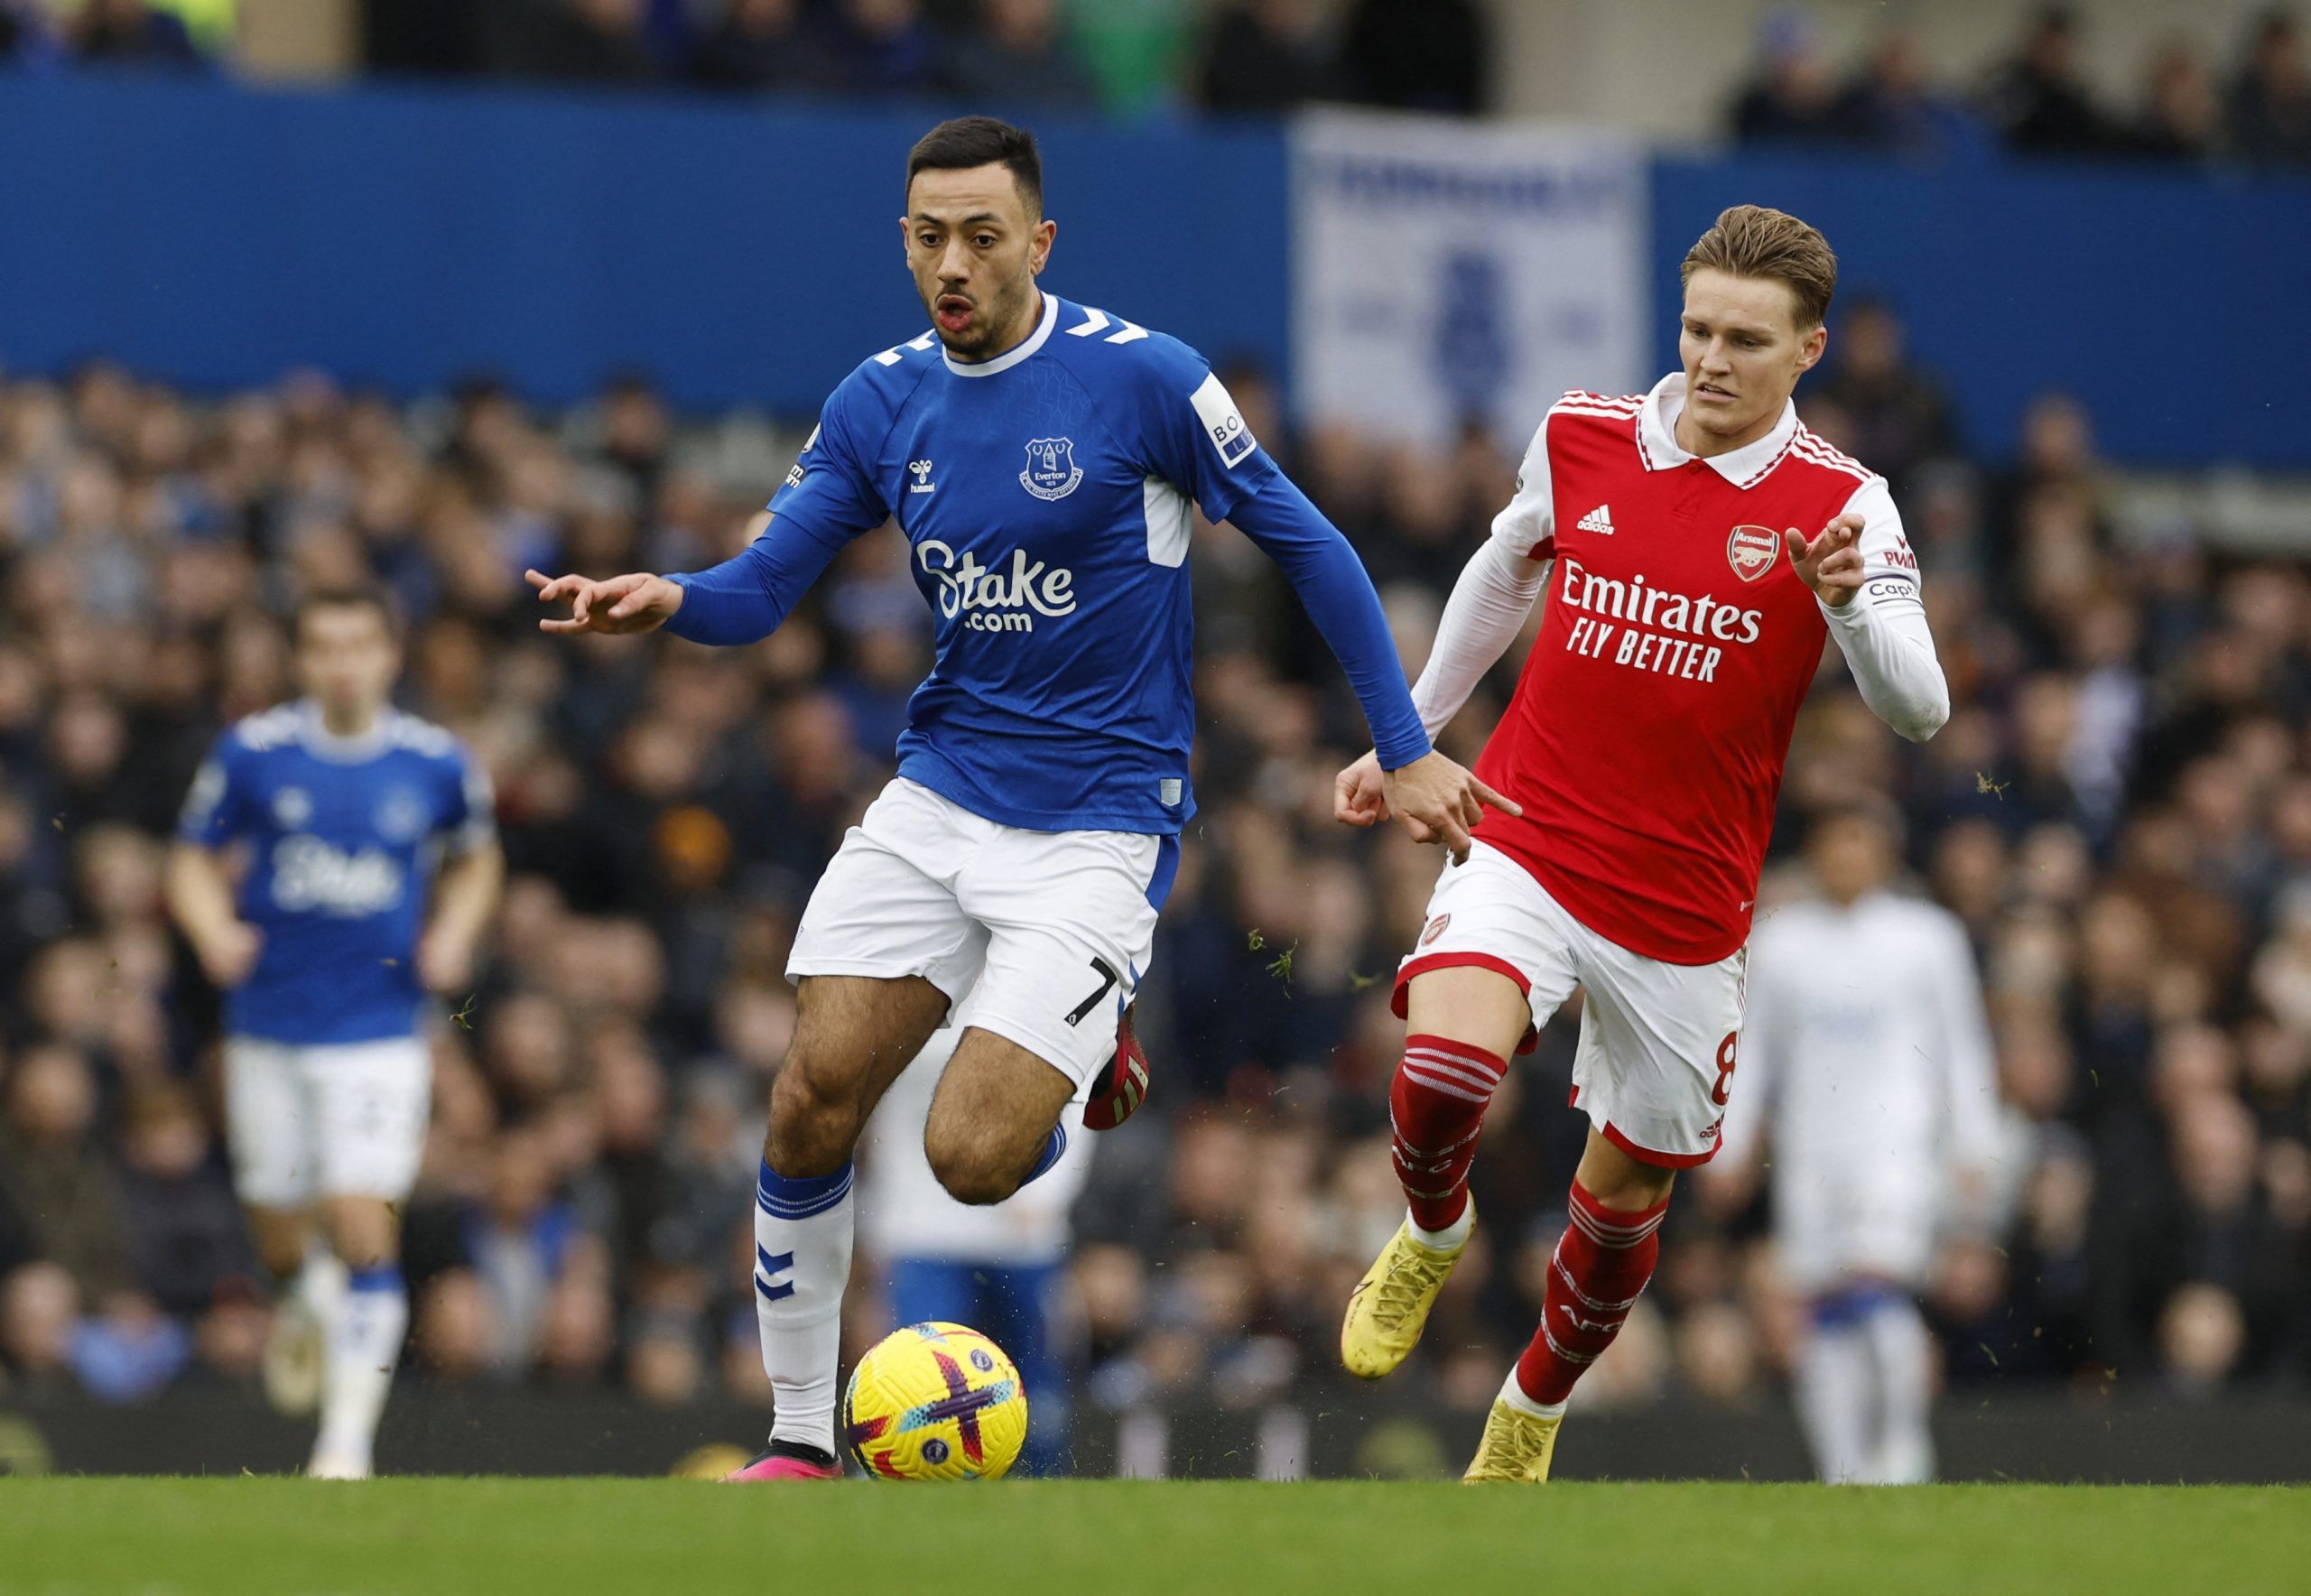 Everton: McNeil “superb” in Arsenal triumph